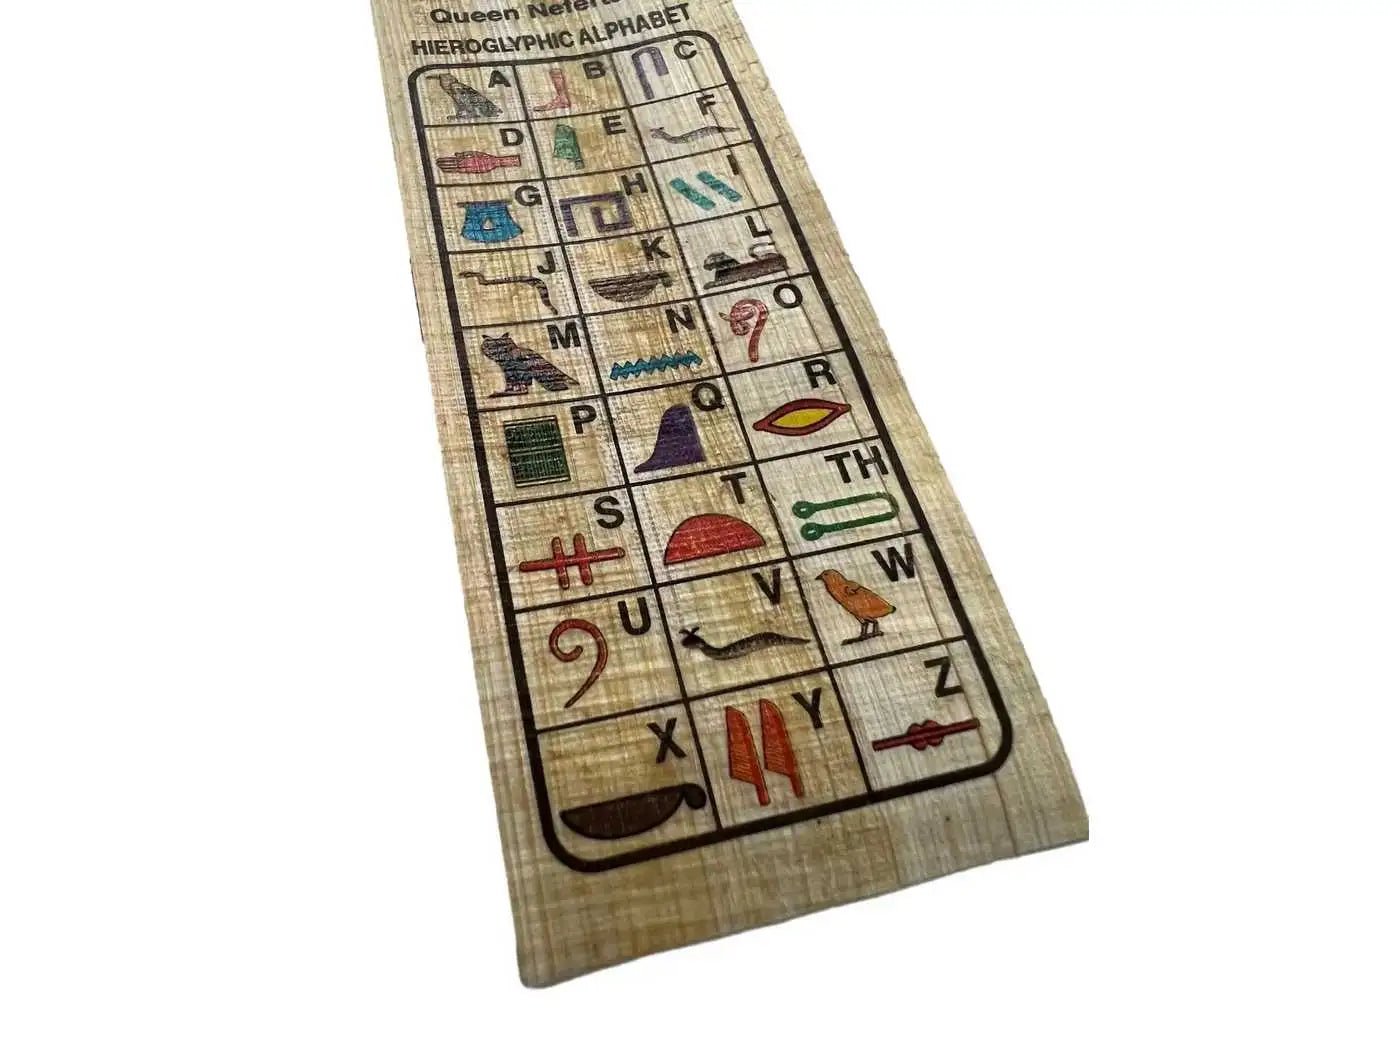 Ankh Symbol of Life - Egyptian Hieroglyphs - Egyptian Papyrus Bookmark History Educational - Egypt Papyrus Painting